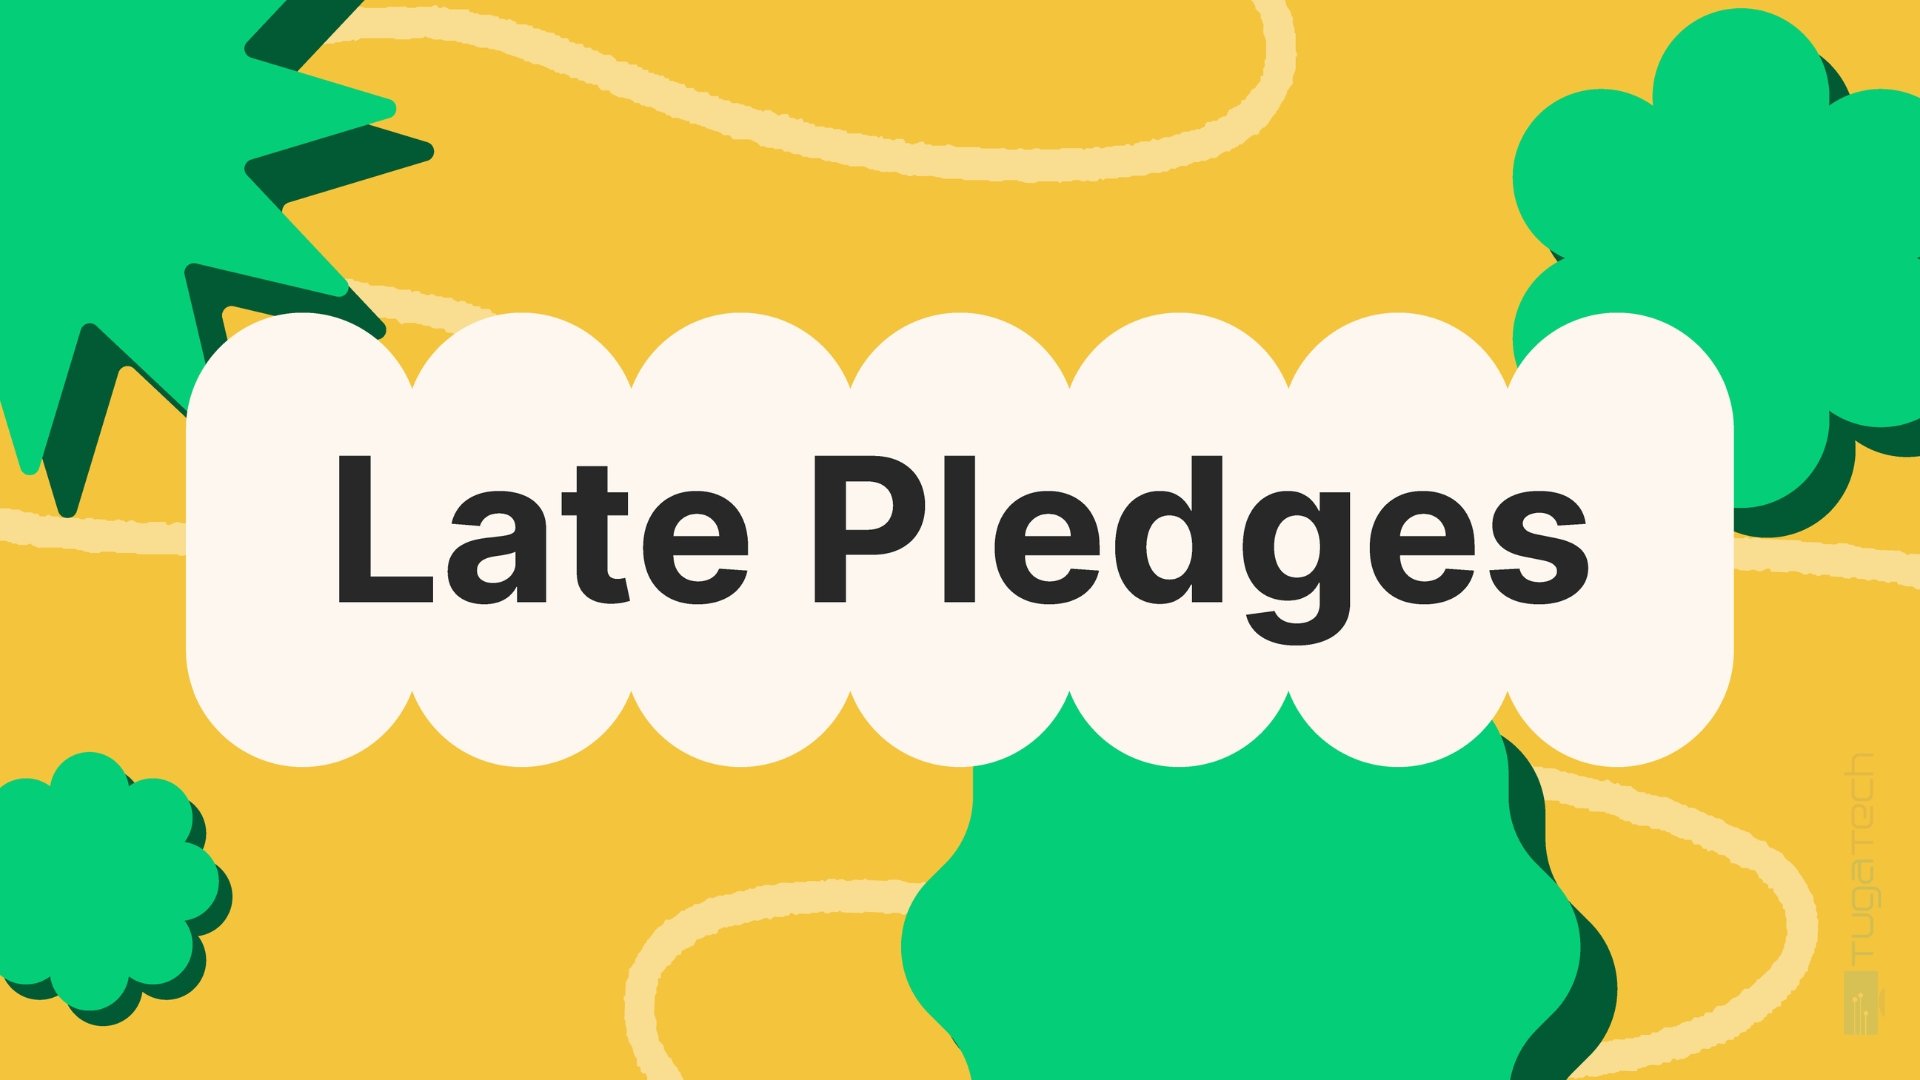 Late pledge